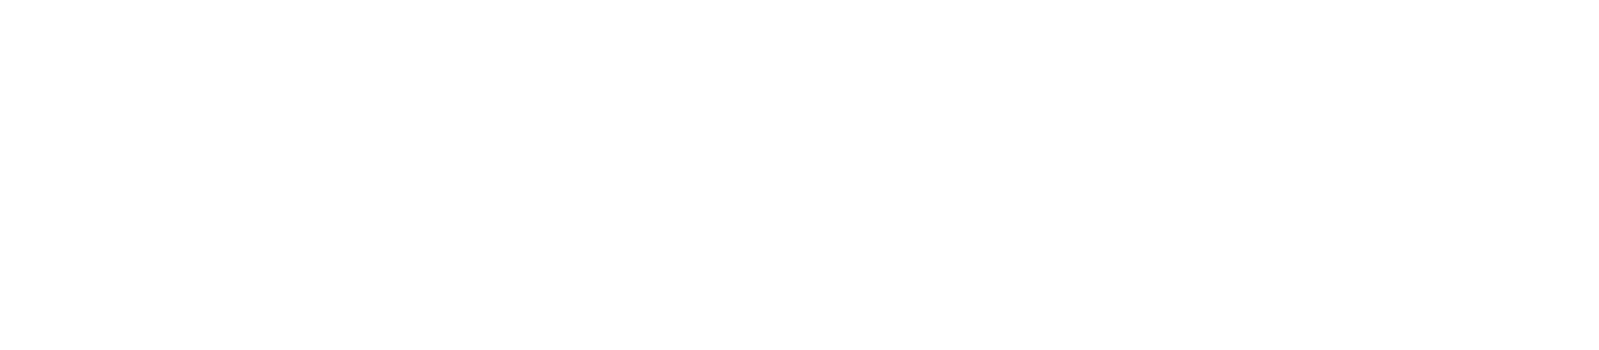 Pure Health Holding logo large for dark backgrounds (transparent PNG)